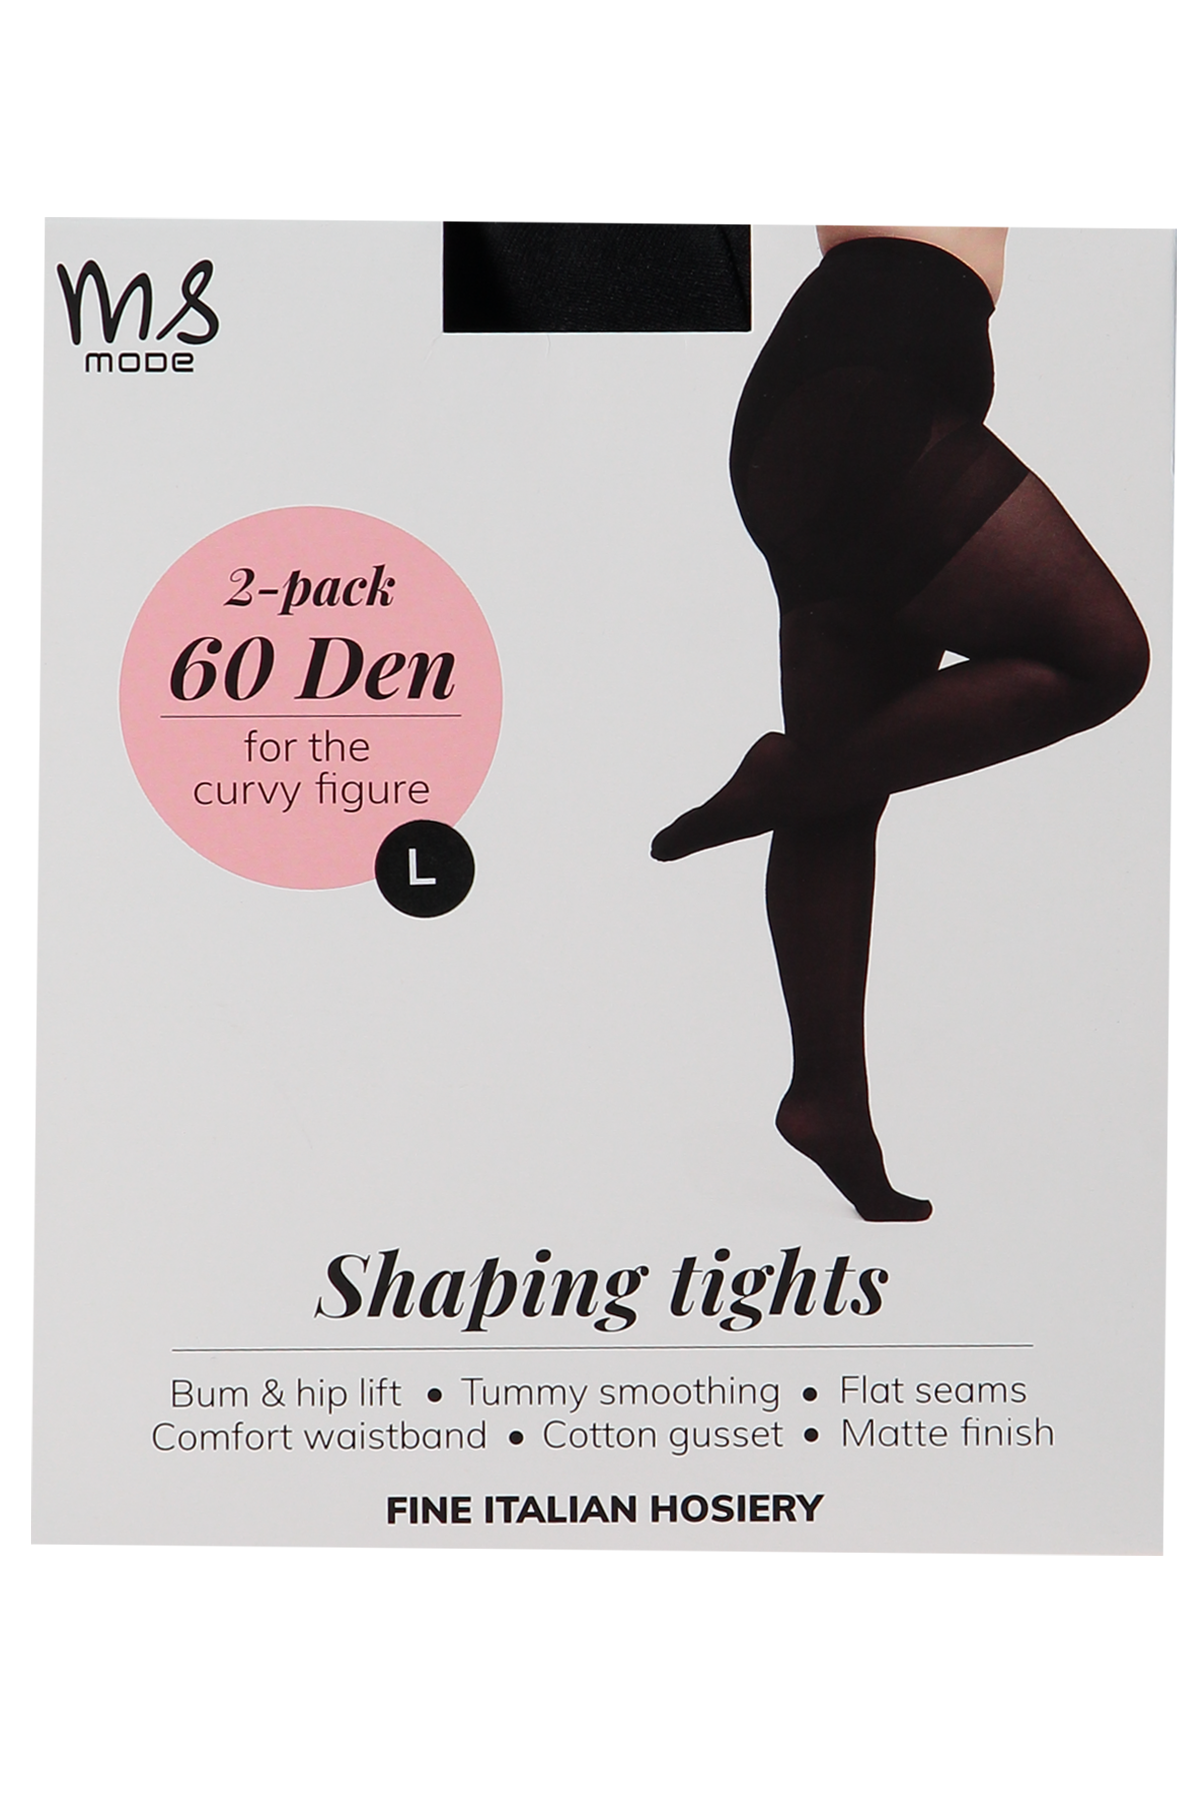 Lionel Green Street ga sightseeing Productie Dames 2-pack Shaping panty 60 denier Zwart bij MS Mode®